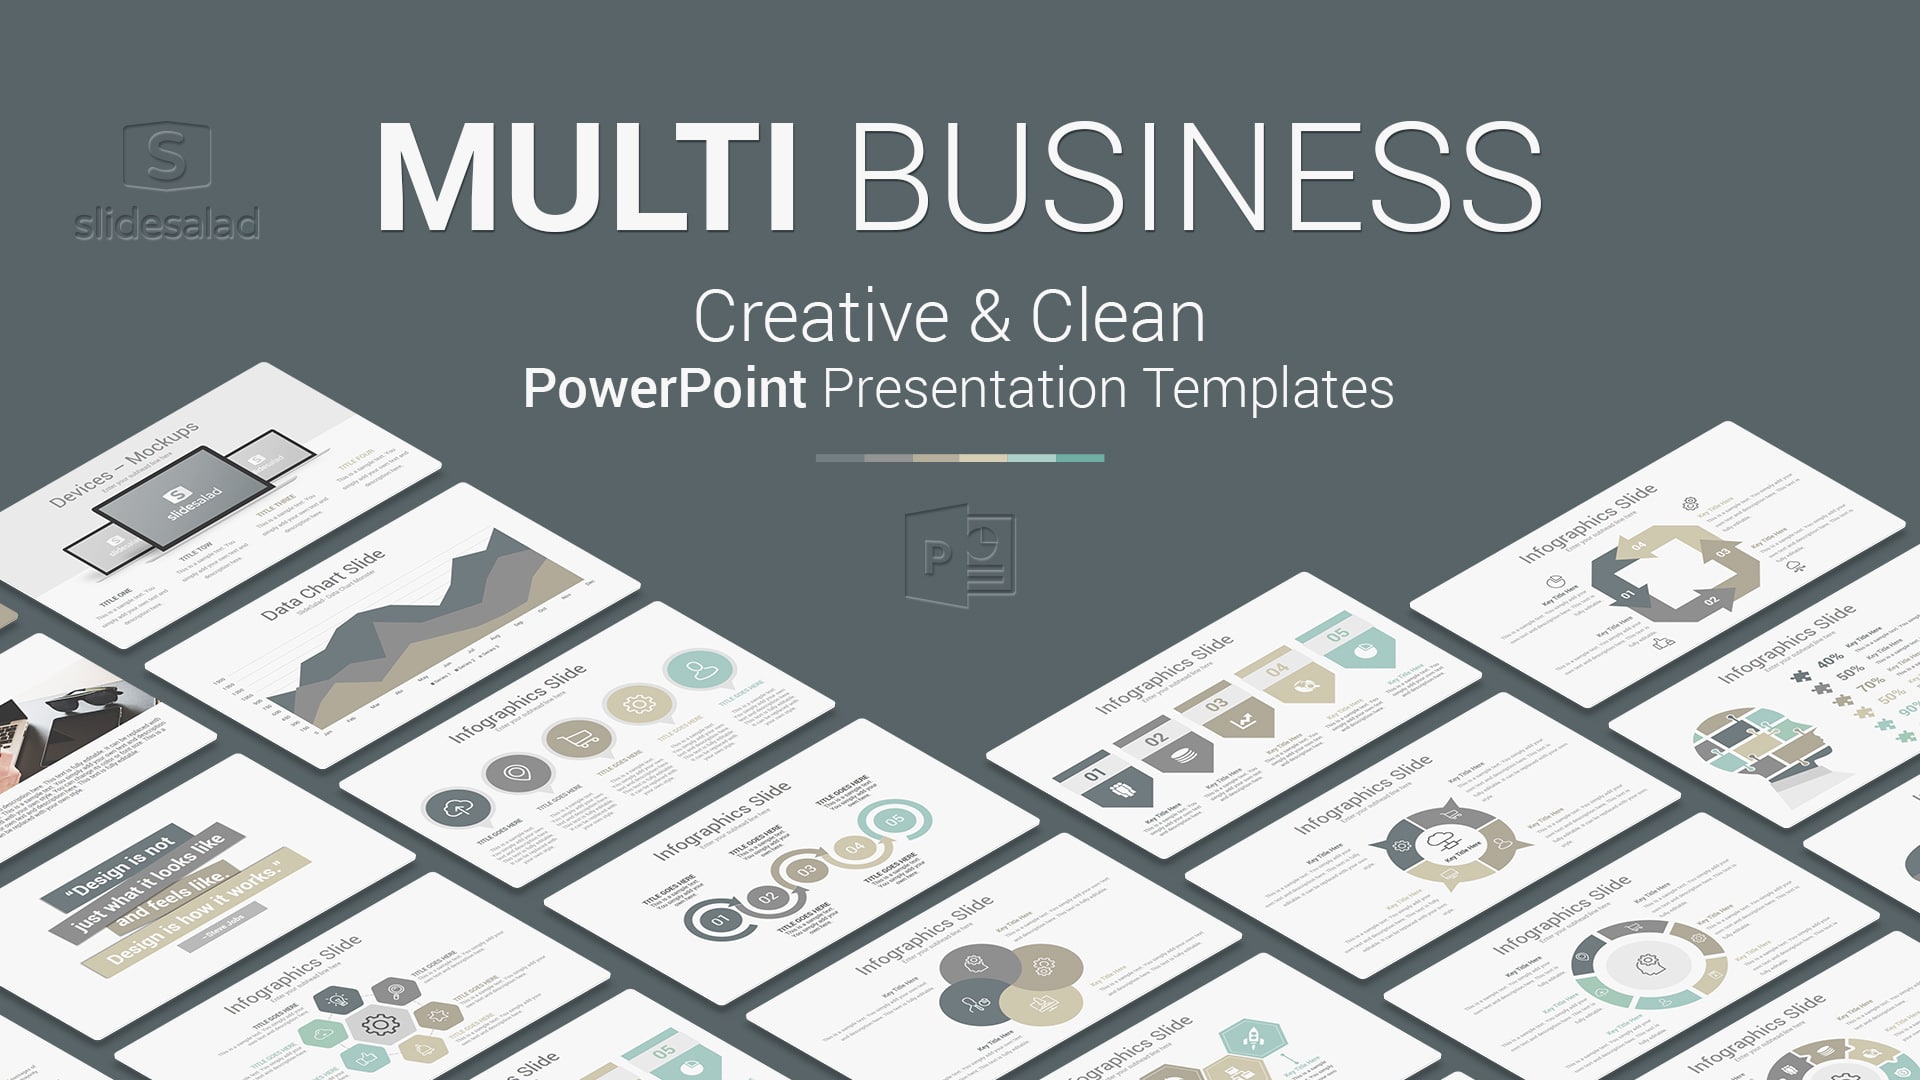 Multipurpose PPT Presentation Templates Design for Business Planning